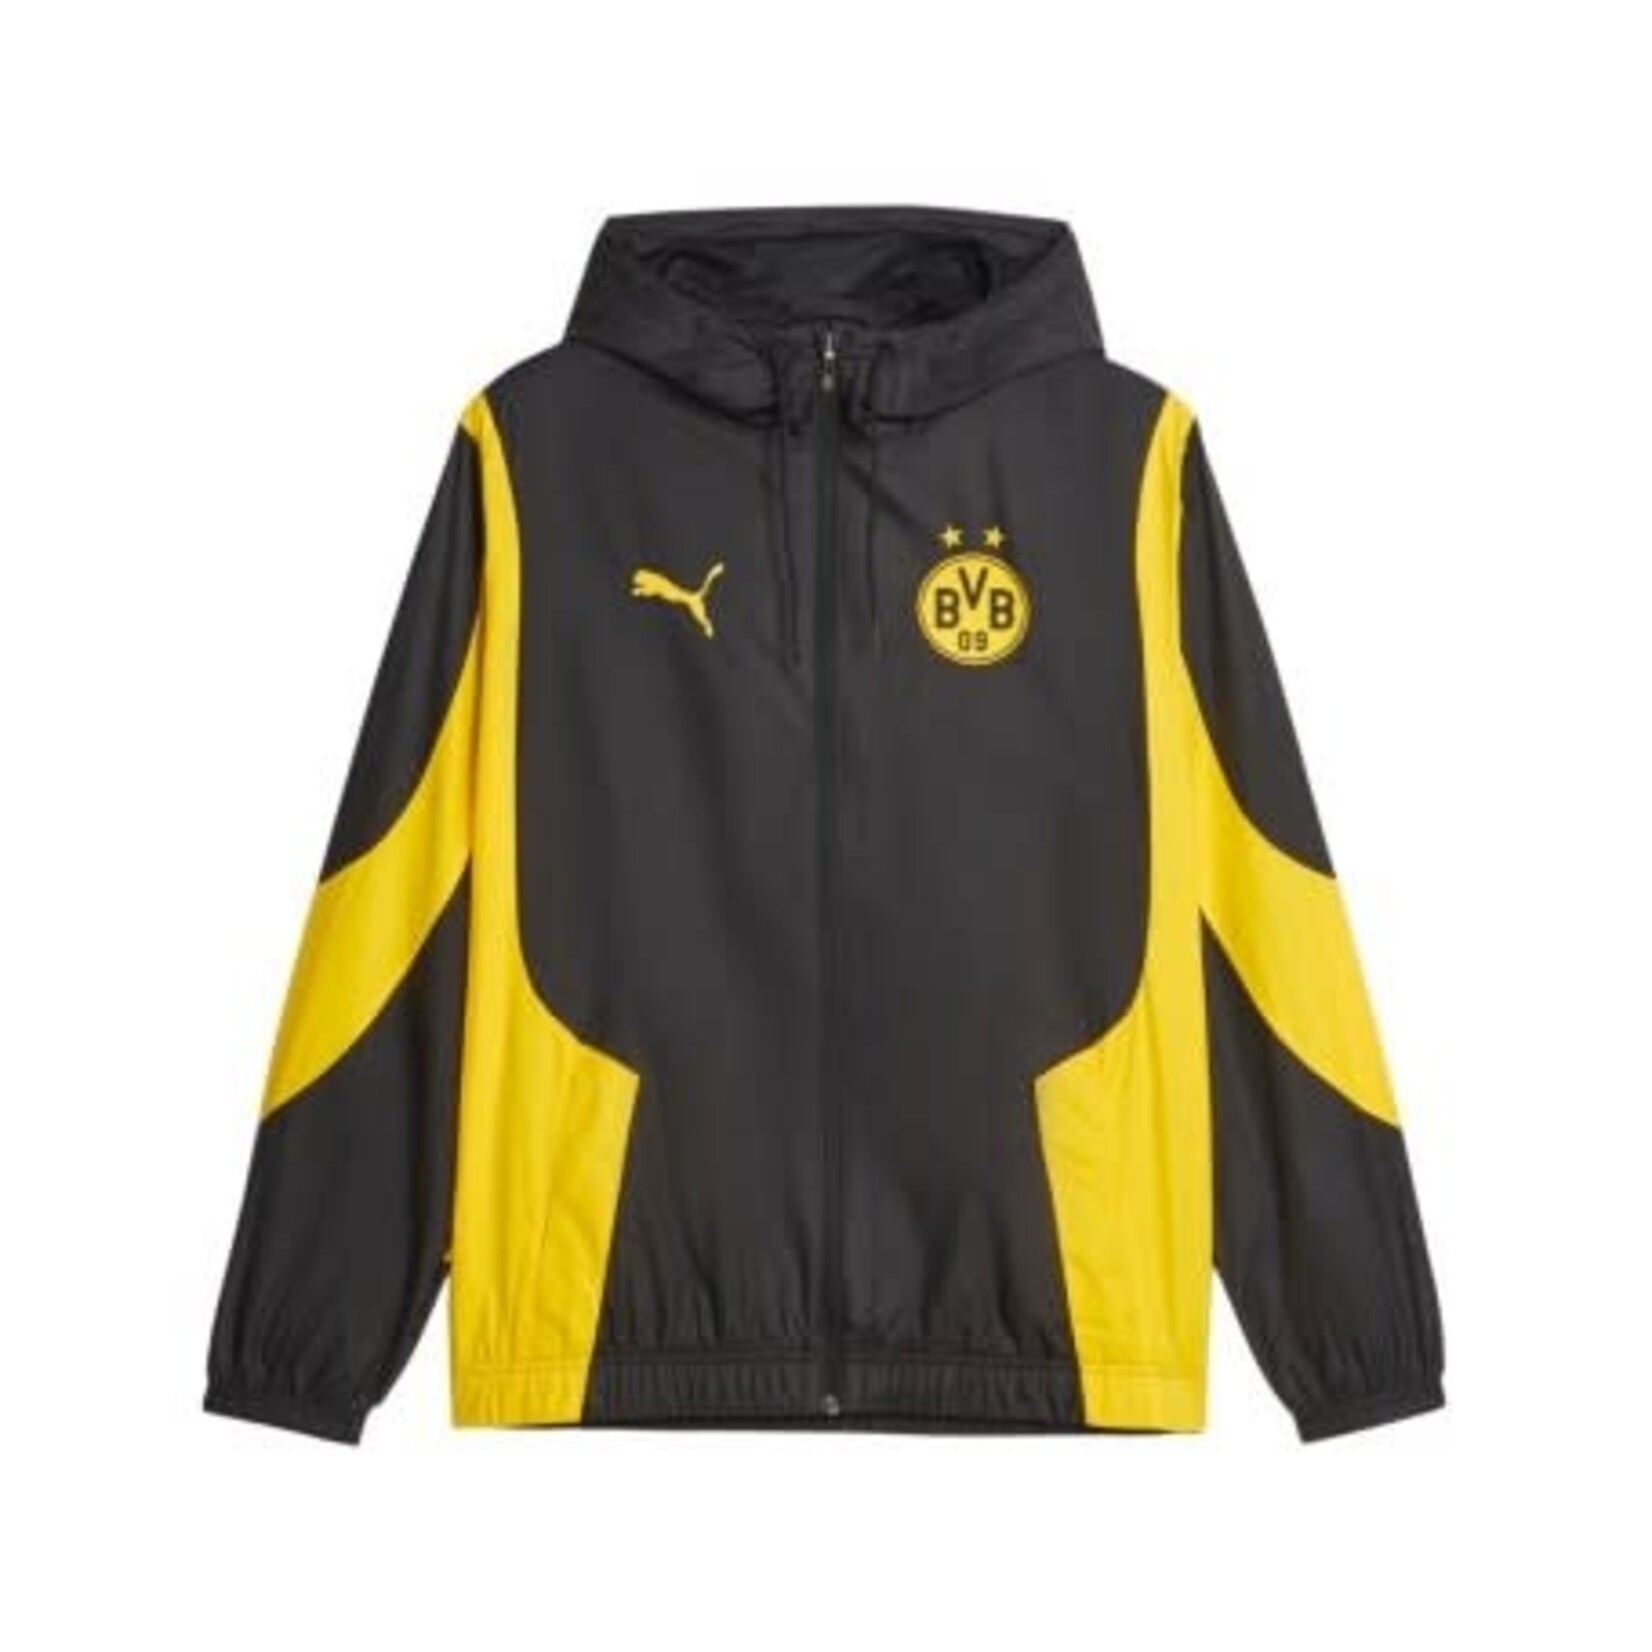 Puma Borussia Dortmund Pre-Match Jacket - 771799 02